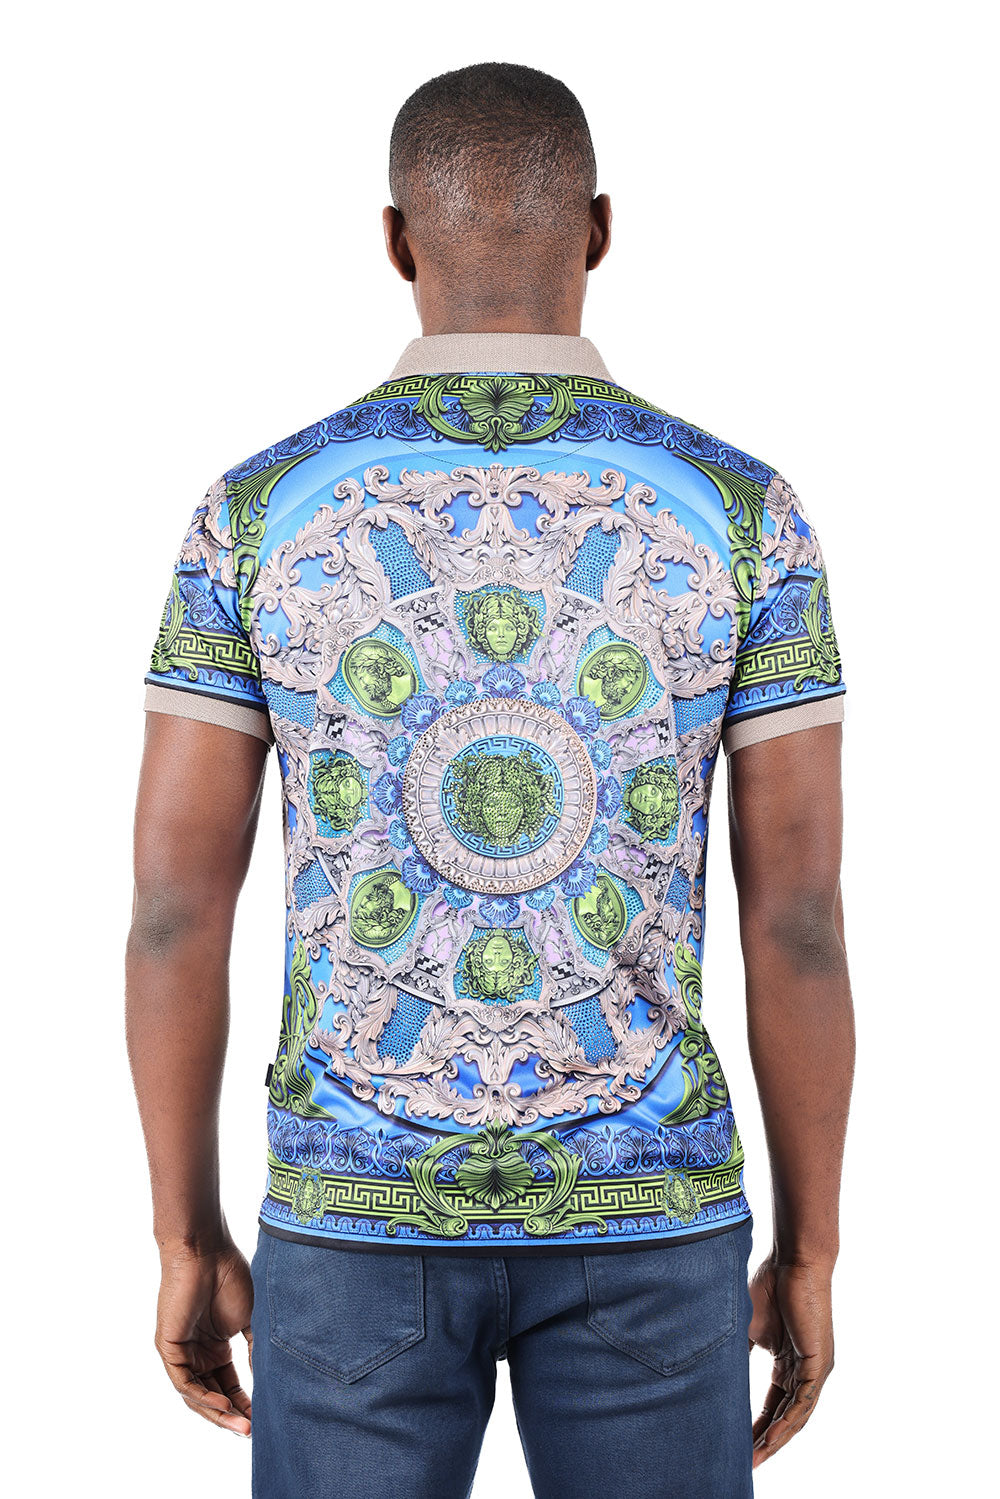 Barabas Men's Rhinestone Floral Medusa Baroque Graphic Tee Polo Shirts 3PSR16 Blue